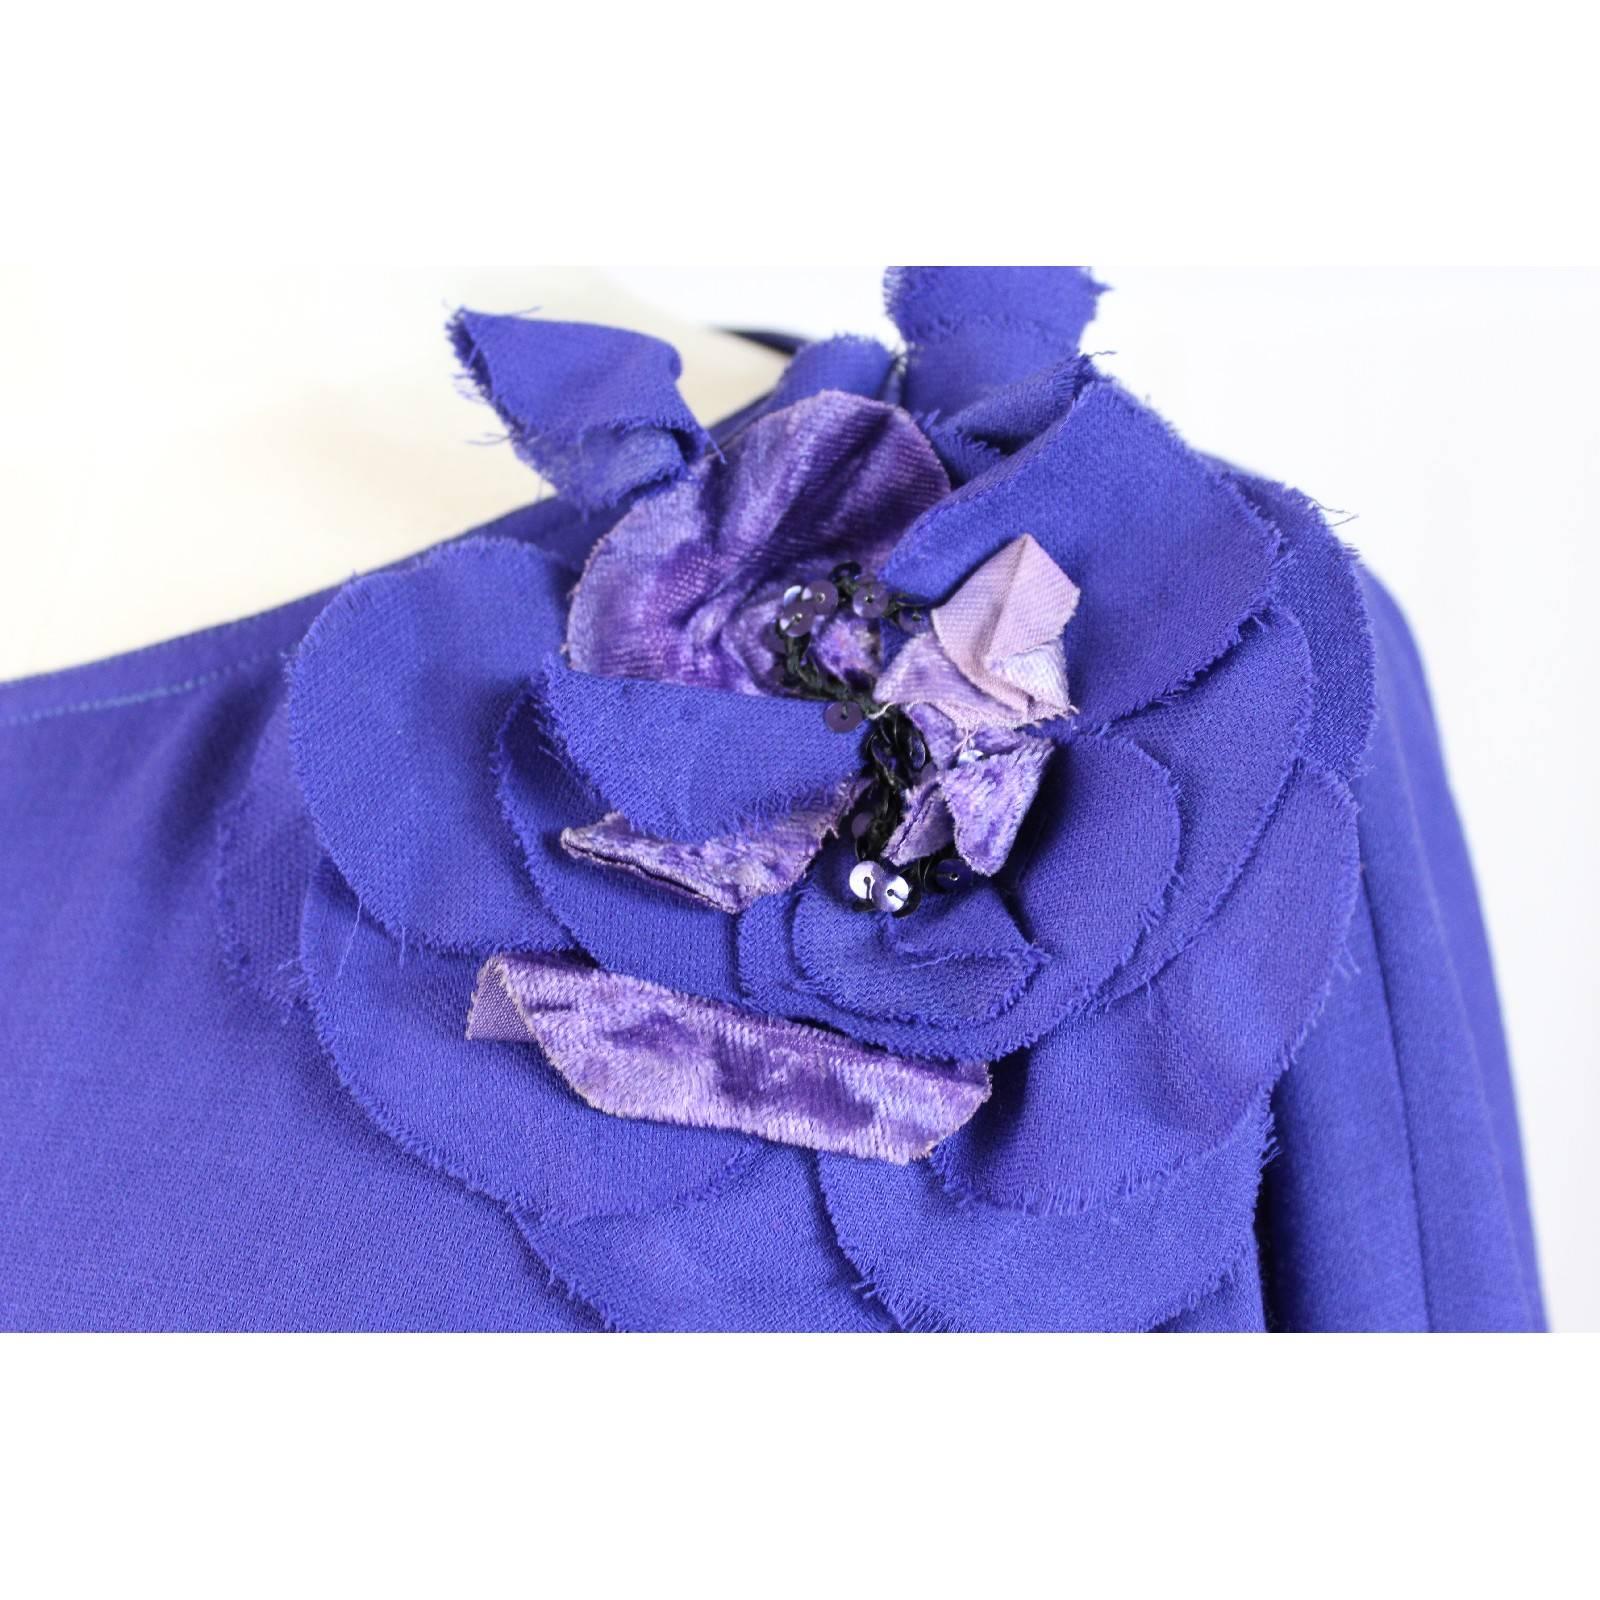 Nazareno Gabrielli wool blue dress tunic flower size 42 women’s 1980s vintage 1